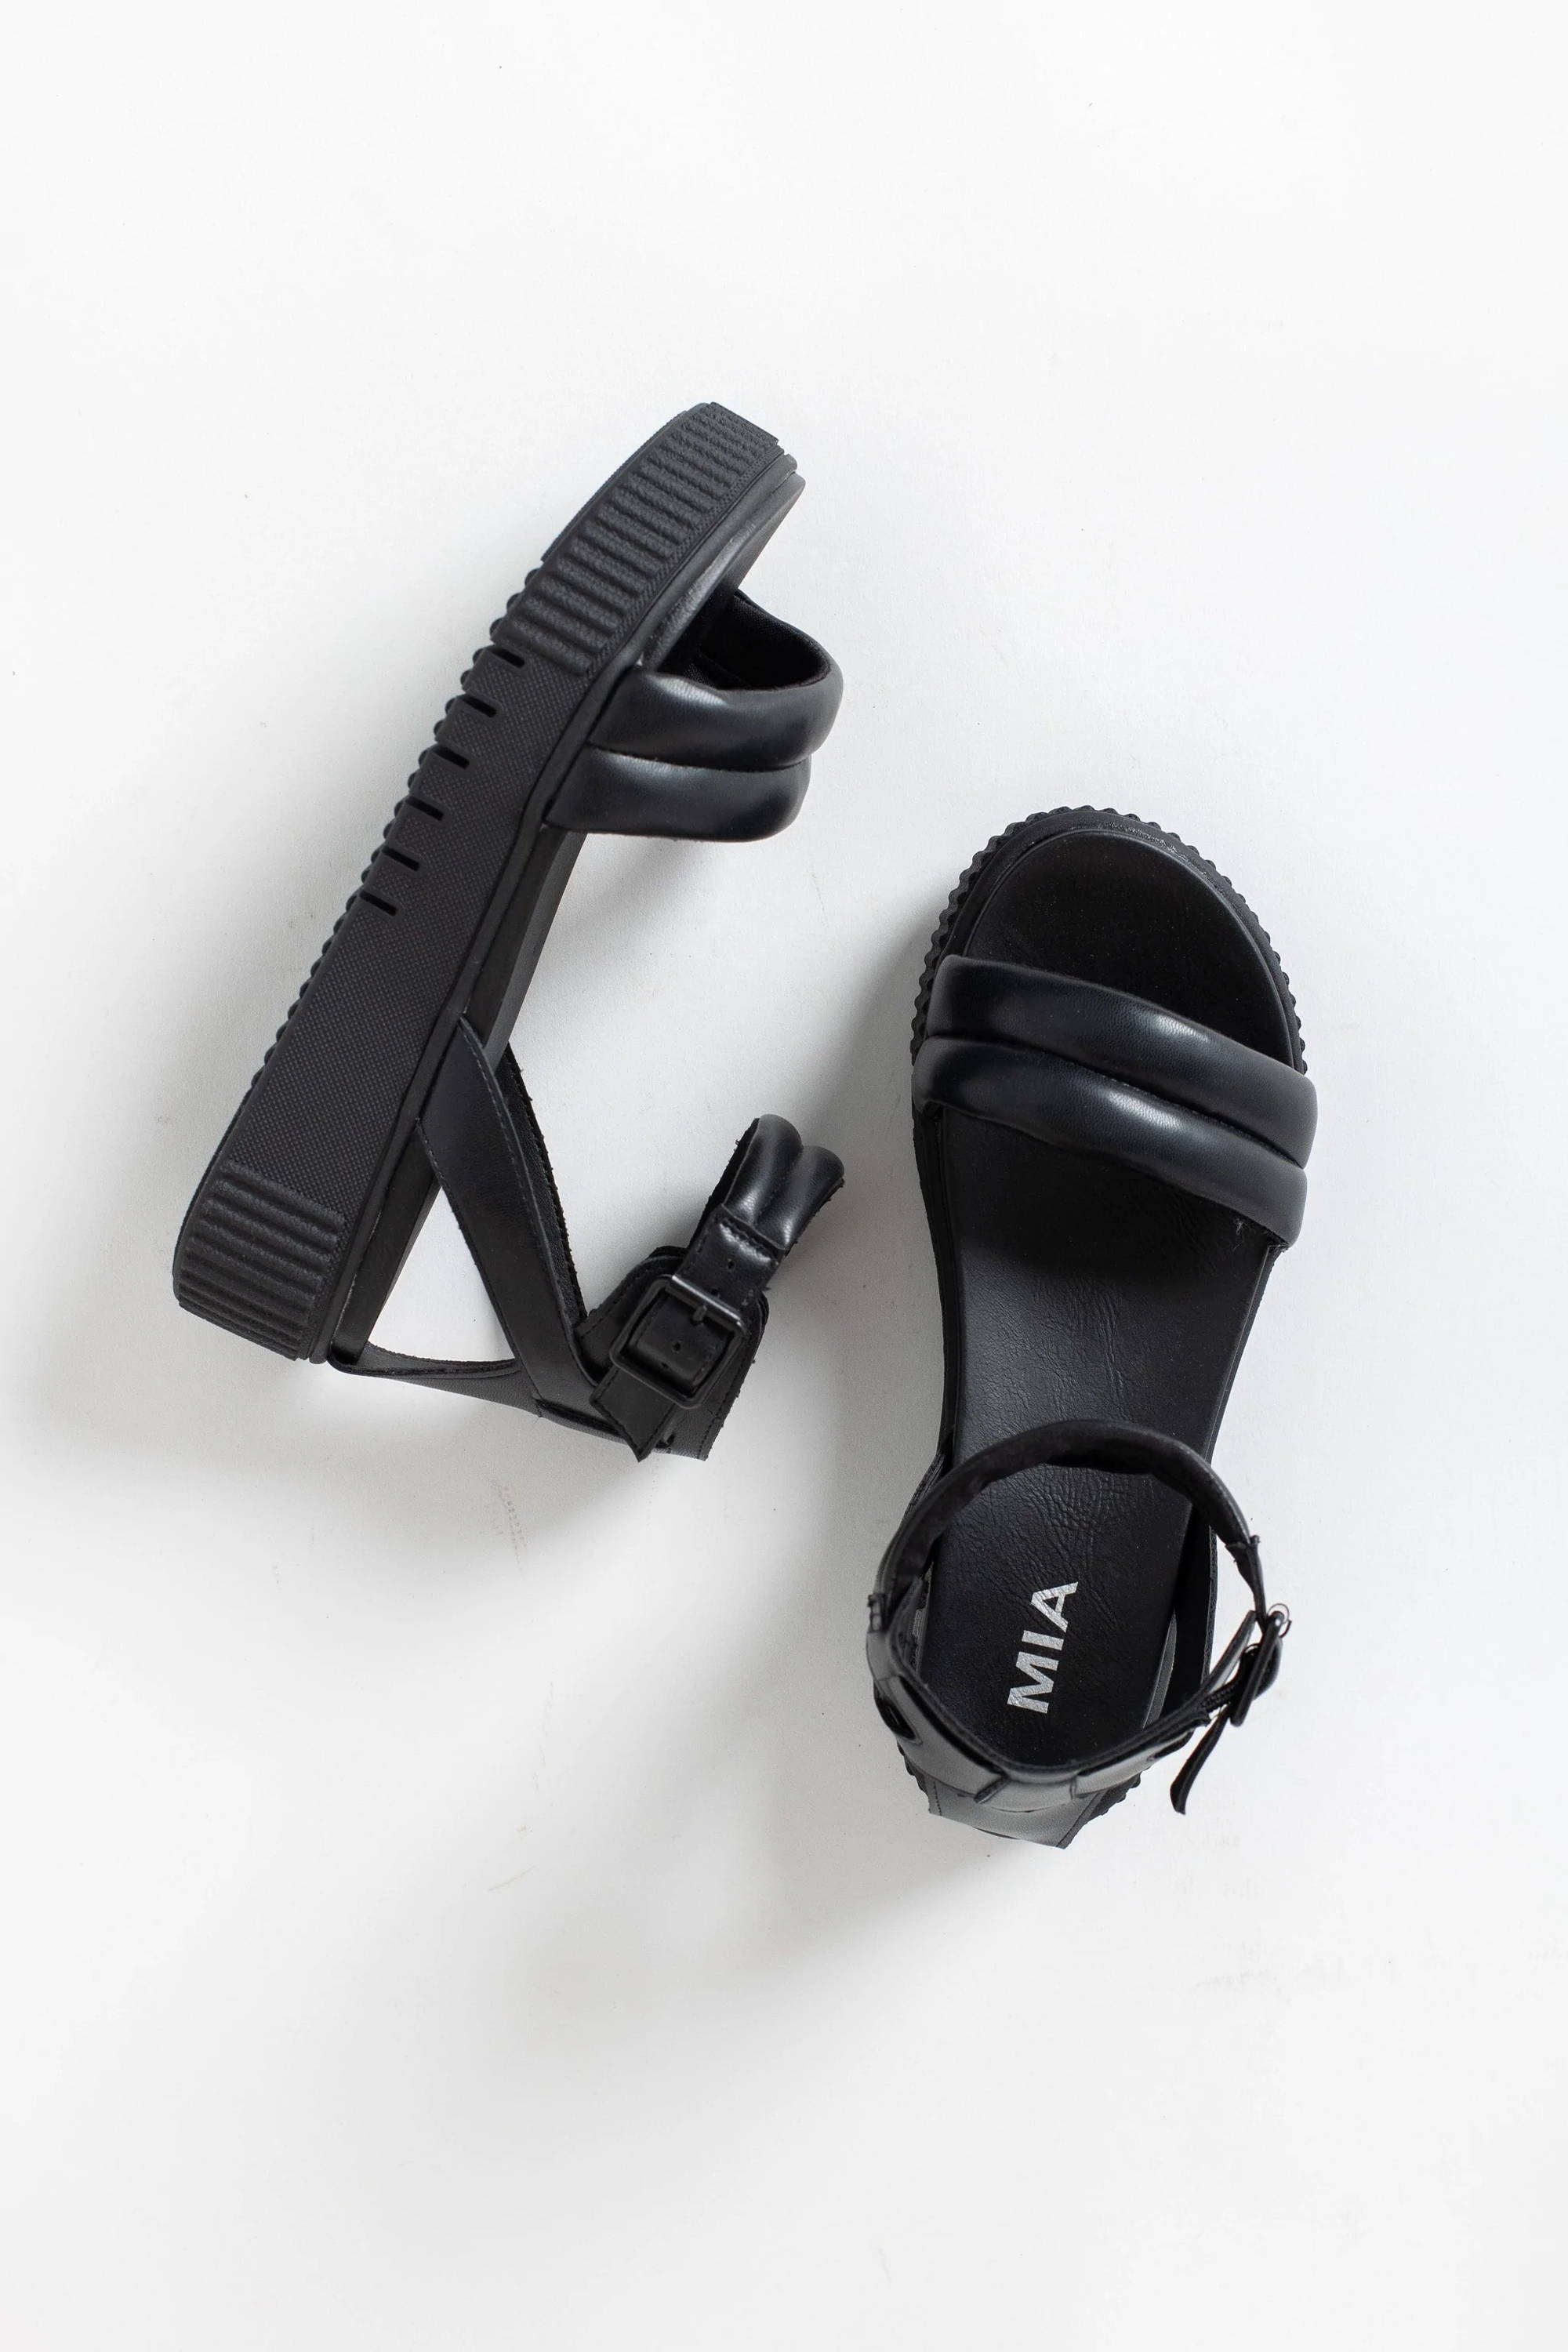 A pair of black leather platform sandals